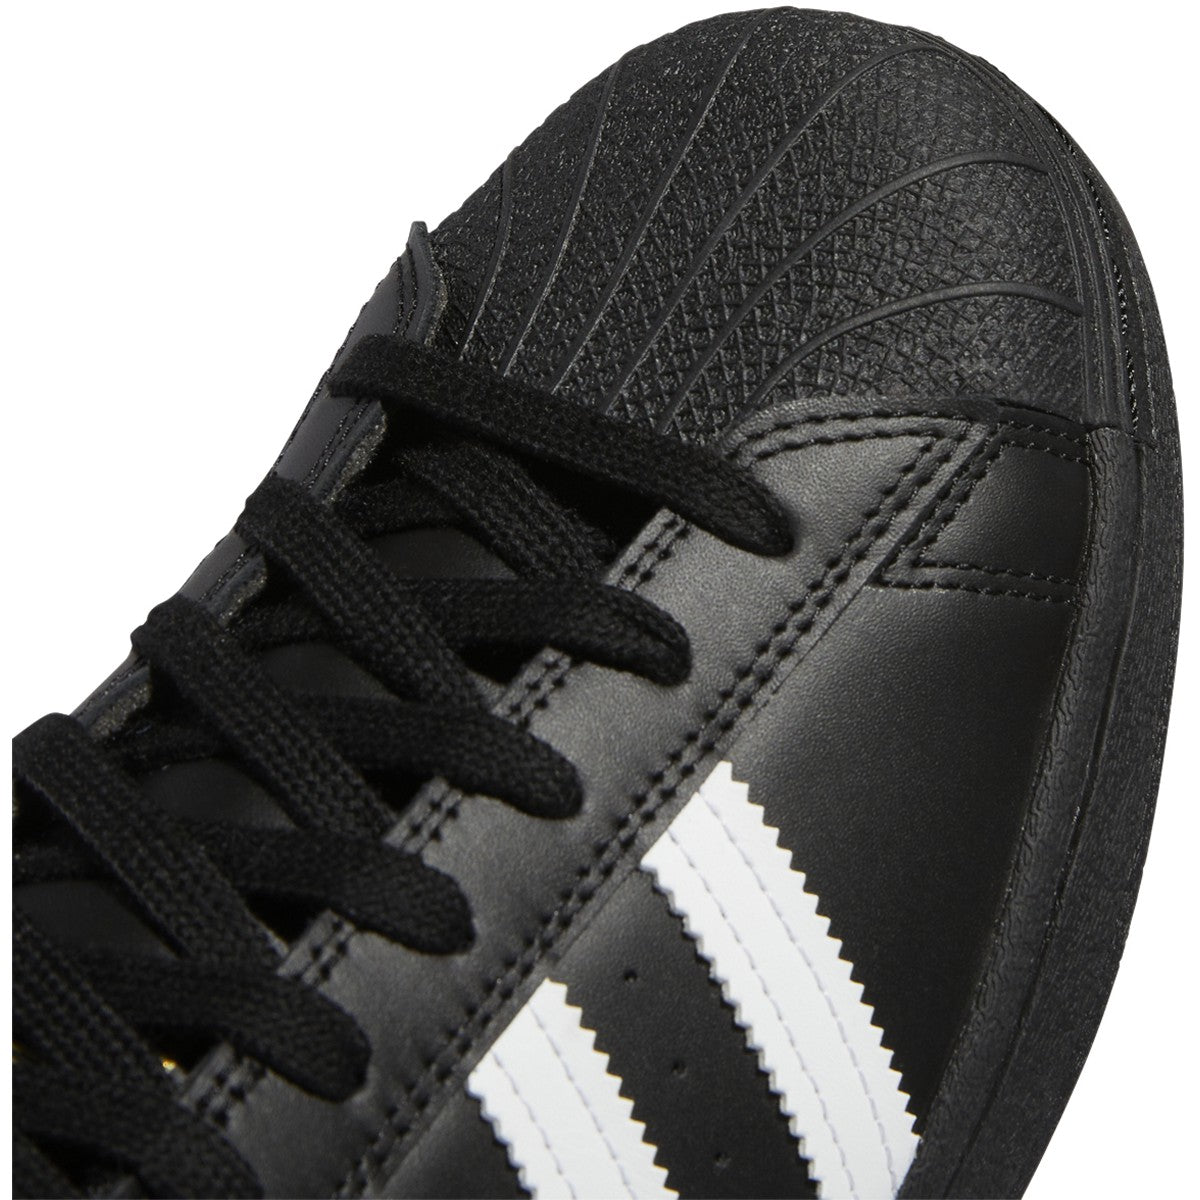 Core Black Superstar ADV Adidas Skateboarding Shoe Detail